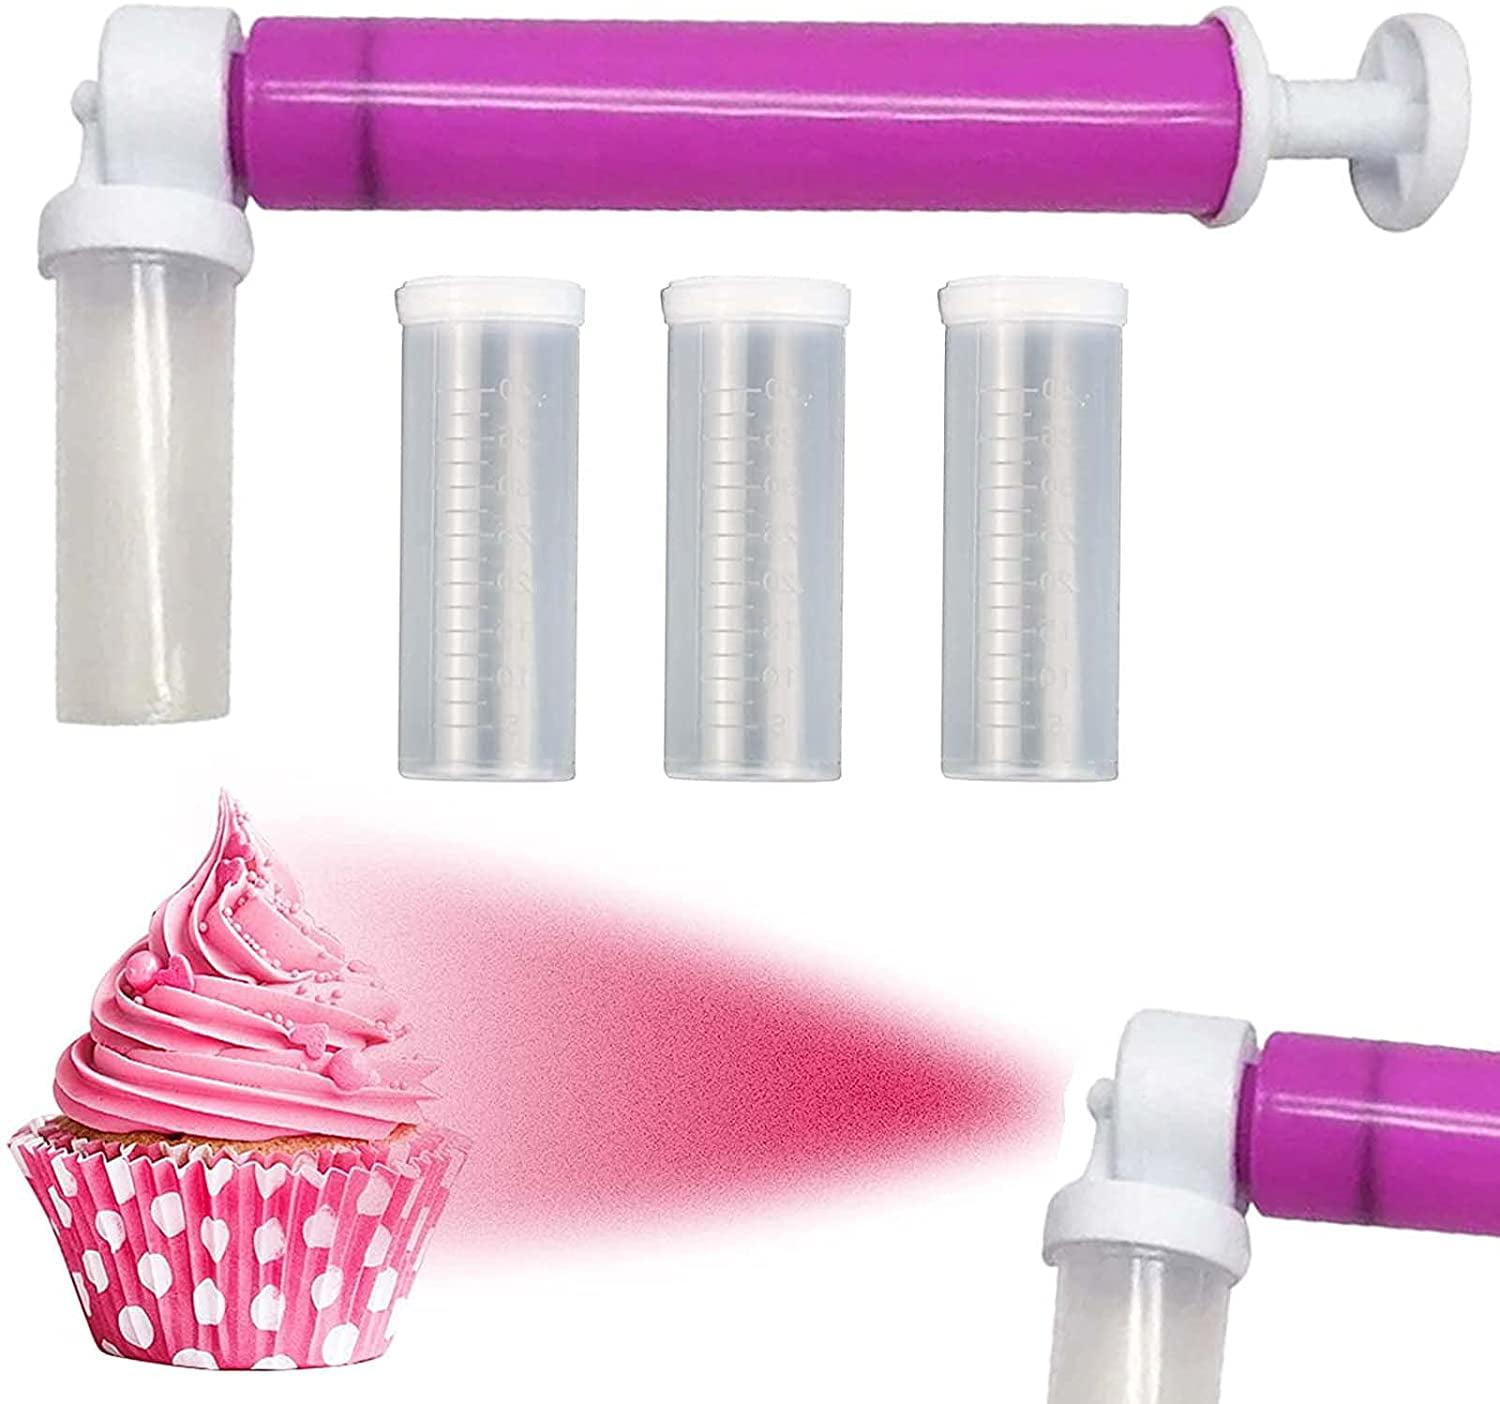 Cake Coloring Duster Manual Airbrush Pump Cupcakes Cake Glitter Decorating  Tool Spray Gun Pot Tube Kit Baking Accessories